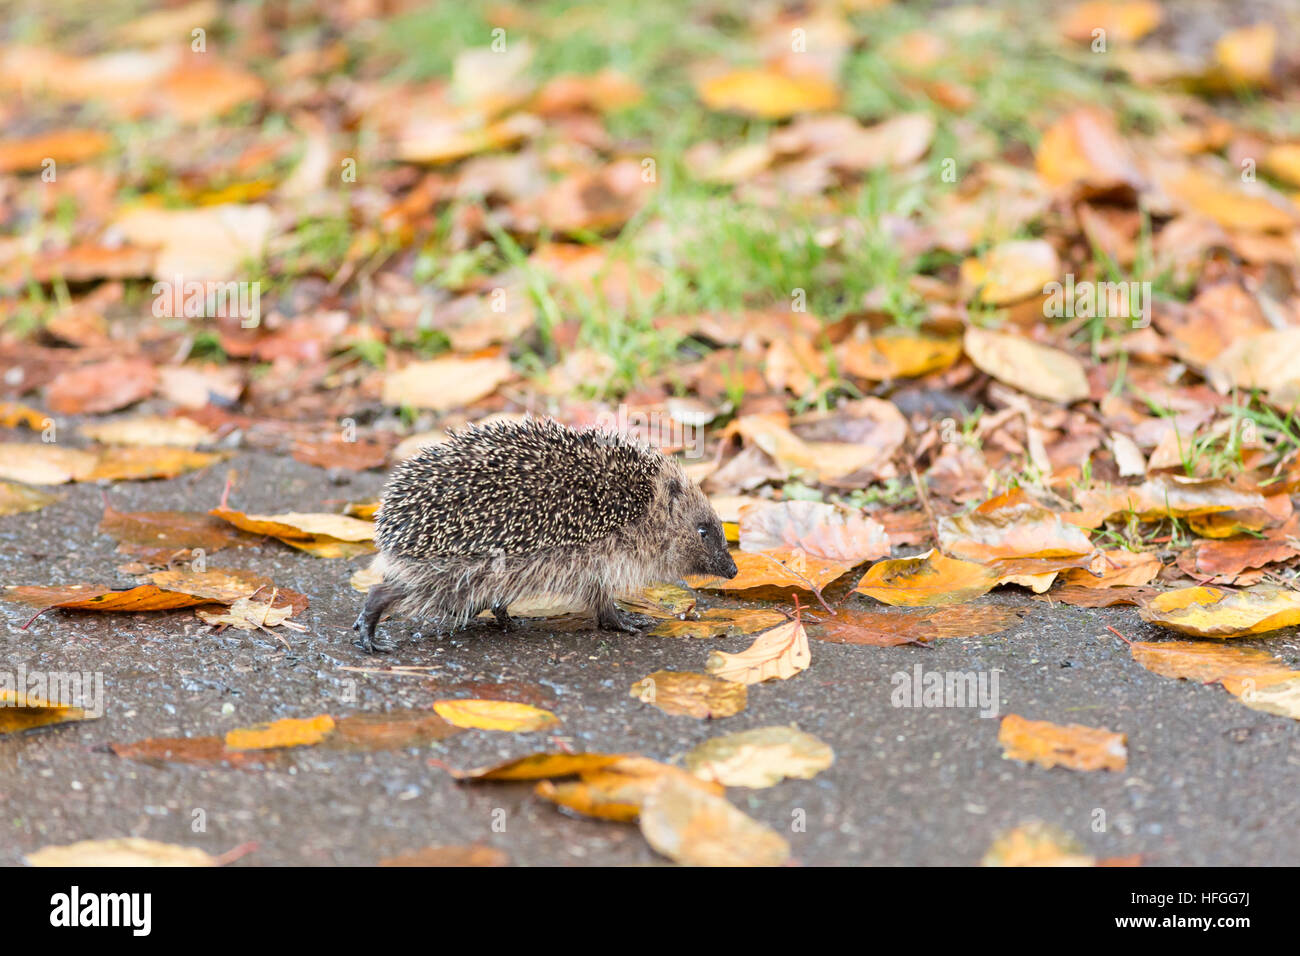 juvenile hedgehog walking in autumn leaf litter Stock Photo